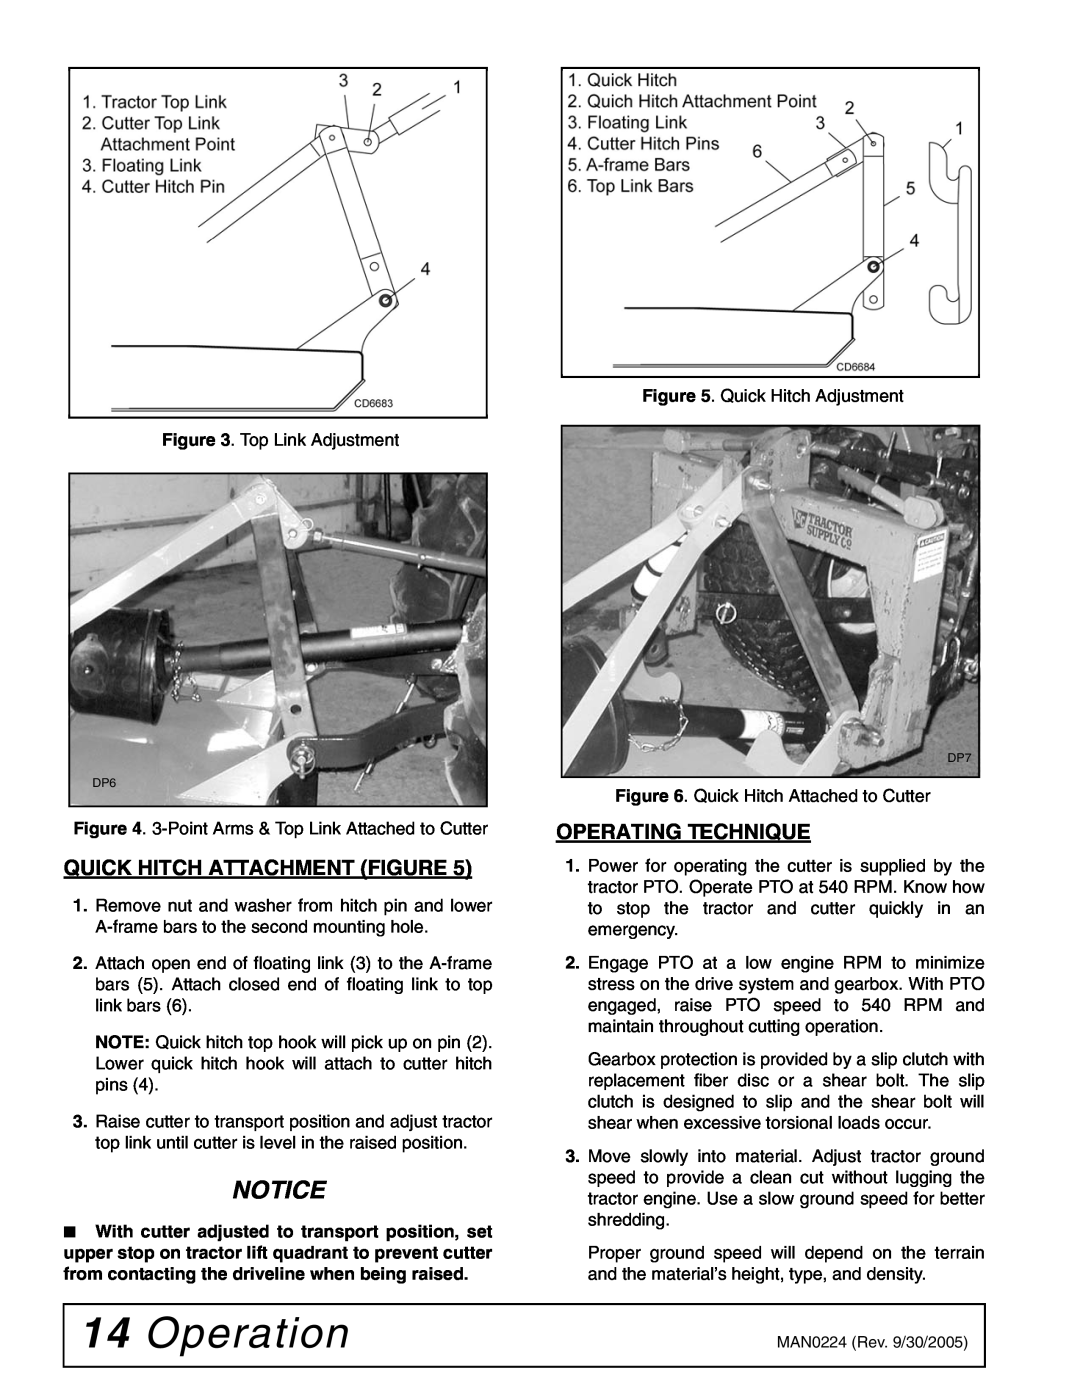 Woods Equipment RCC42 manual Operation, Notice, Quick Hitch Attachment Figure, Operating Technique 